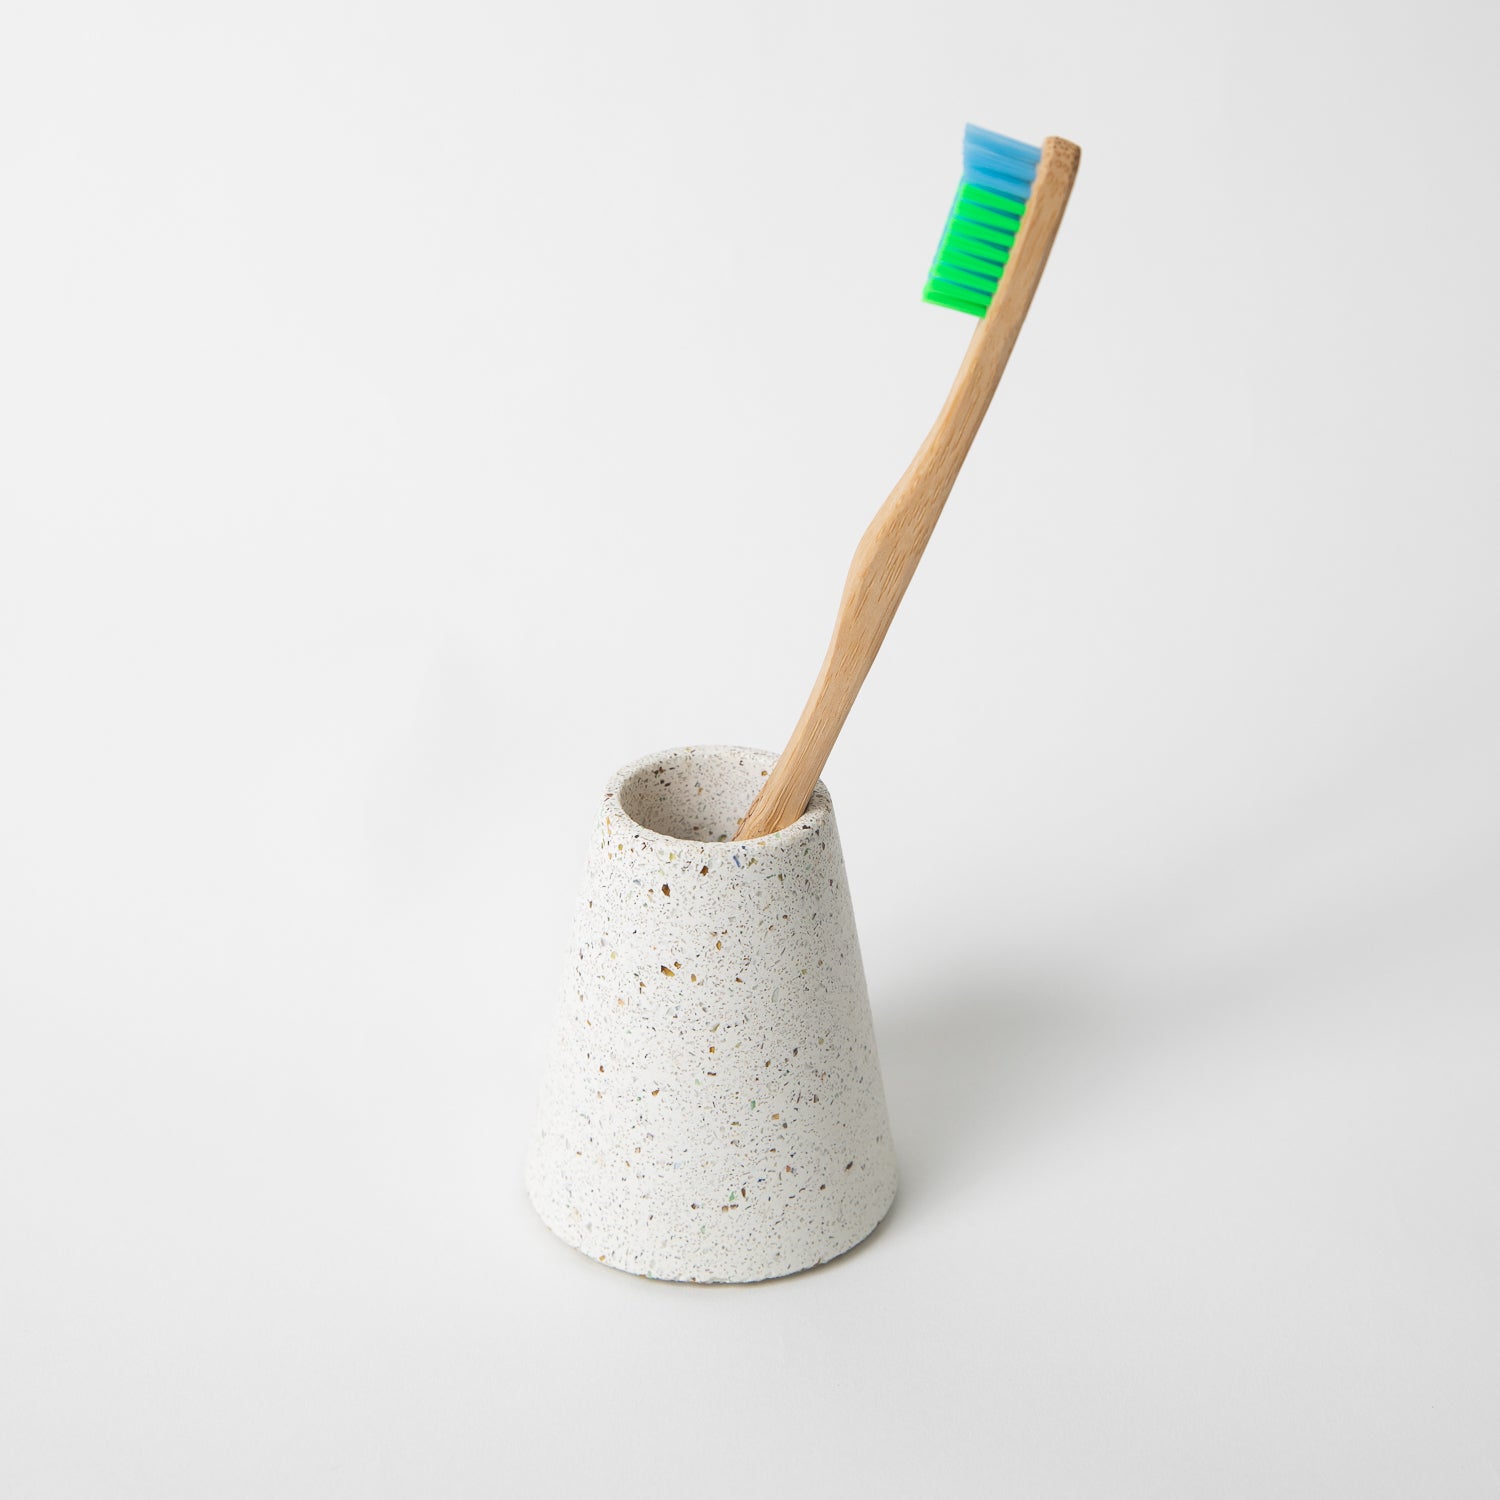 Concrete terrazzo toothbrush holder seen in white terrazzo with toothbrush.